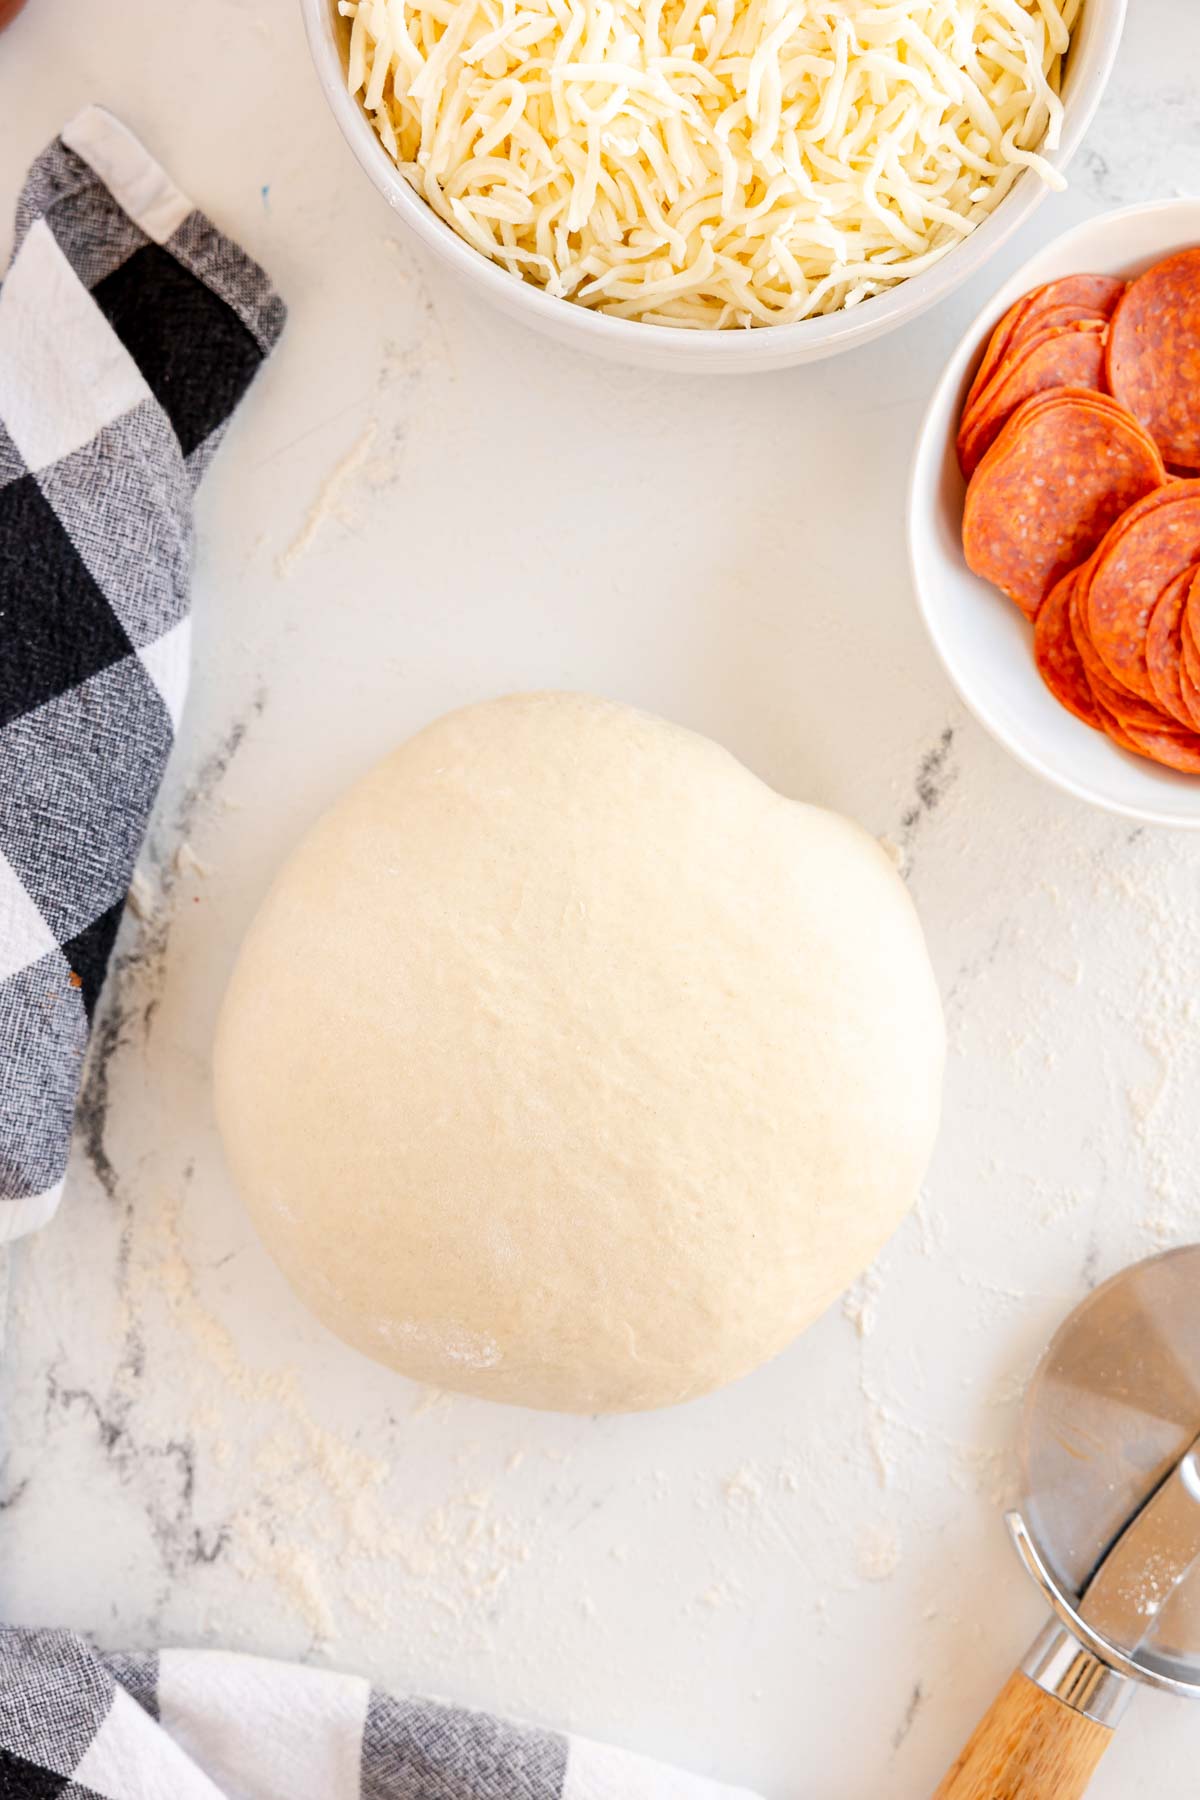 ball of homemade pizza dough